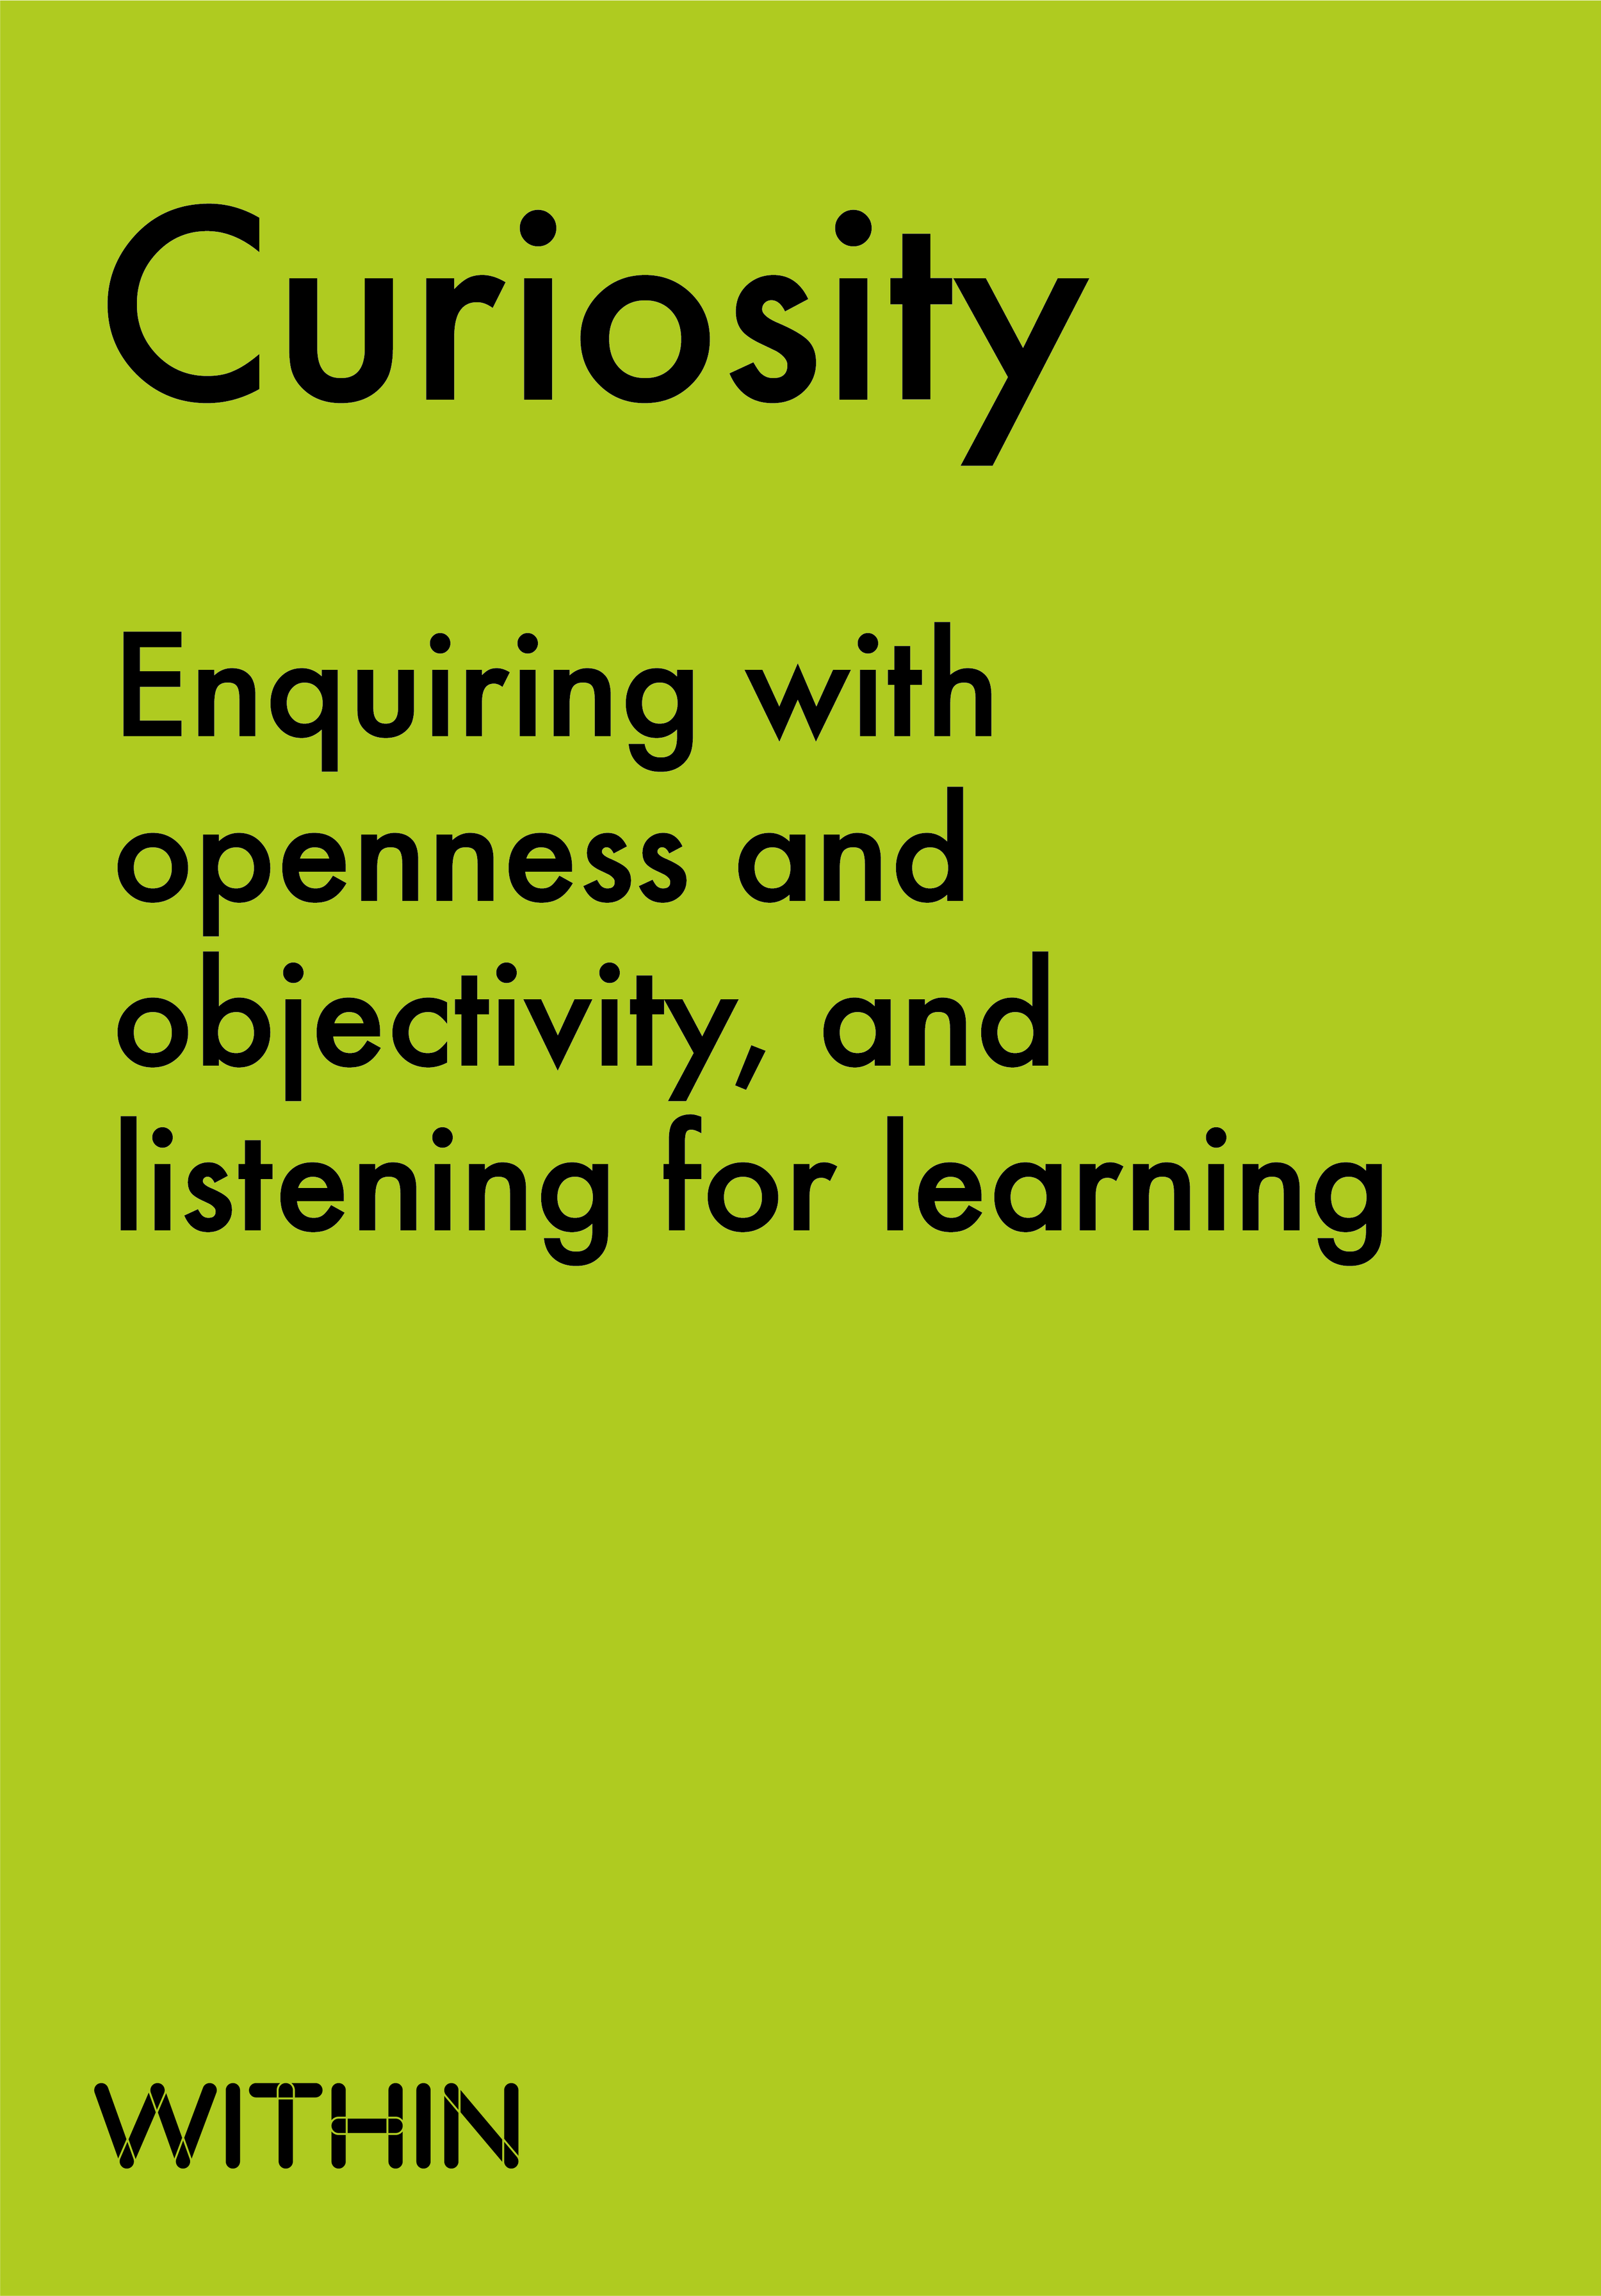 Human-Centred Leadership Values 6 Curiosity